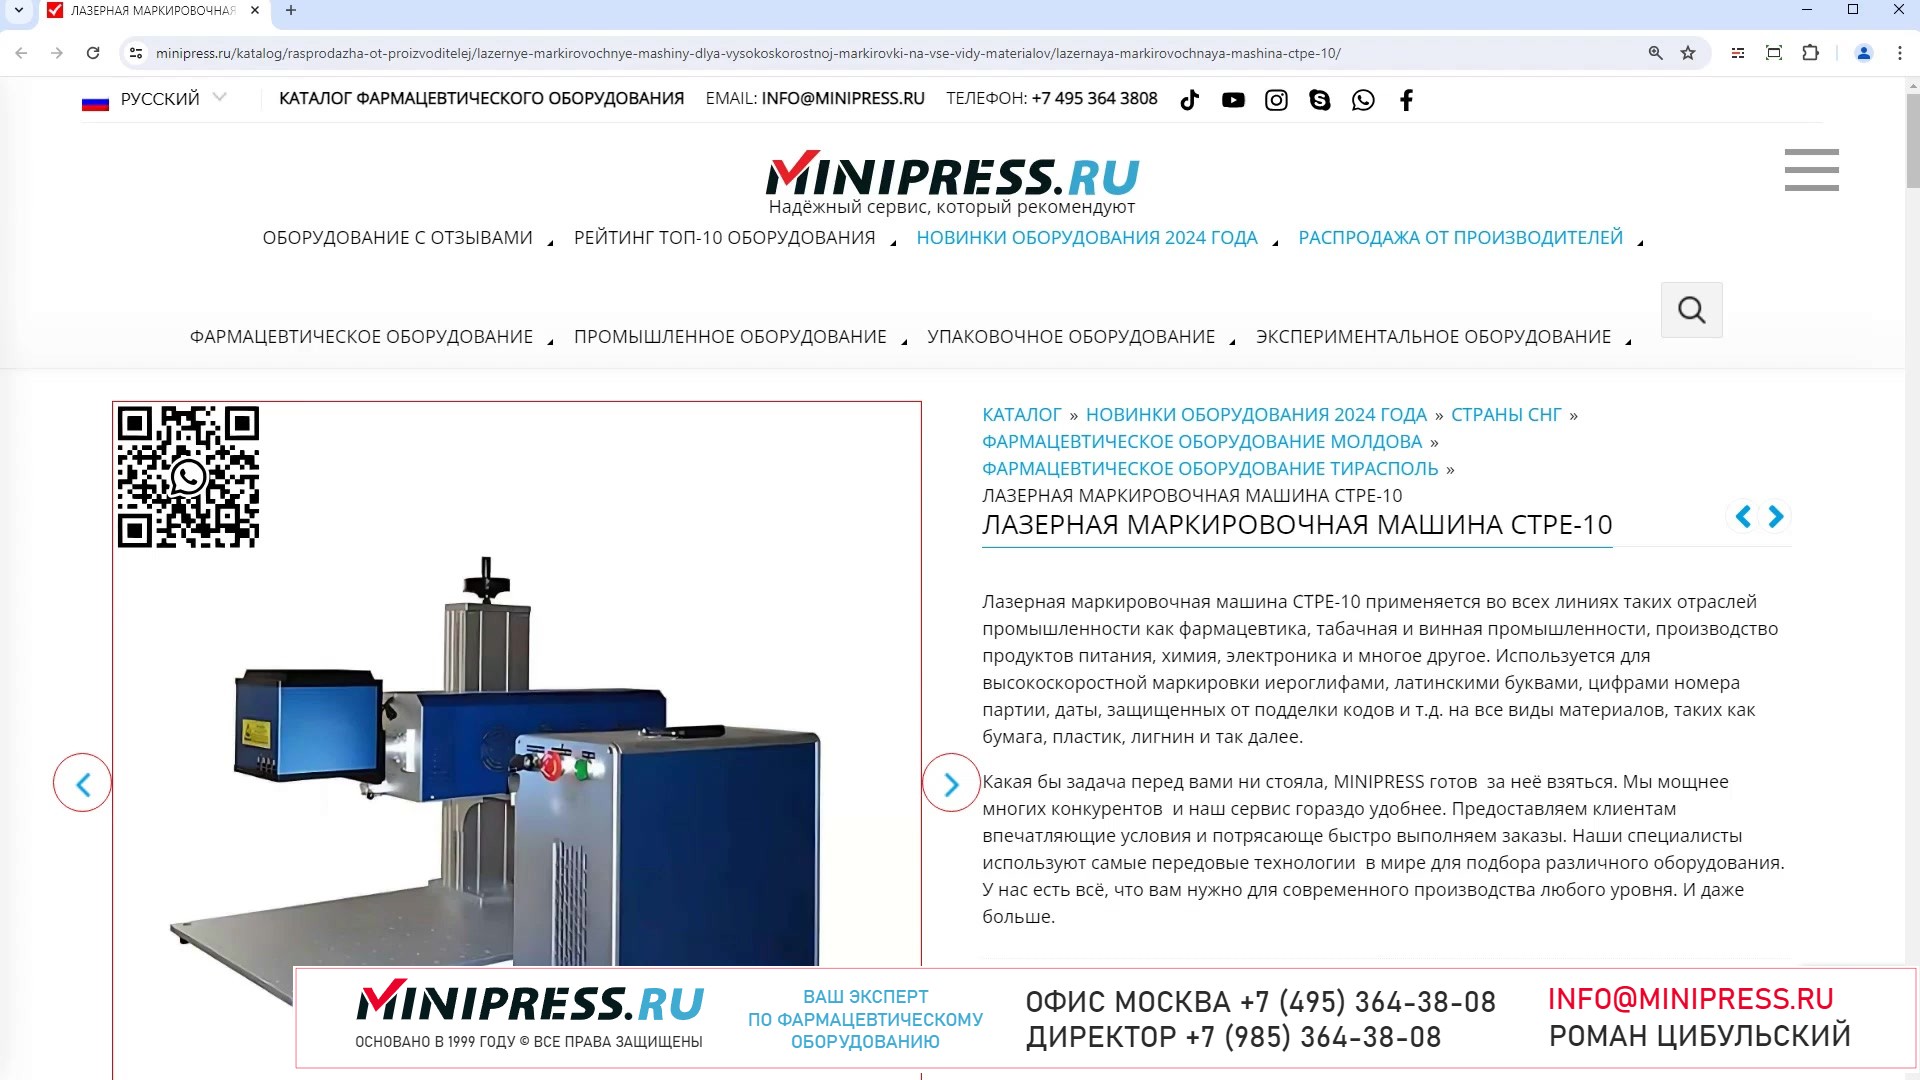 Minipress.ru Лазерная маркировочная машина CTPE-10